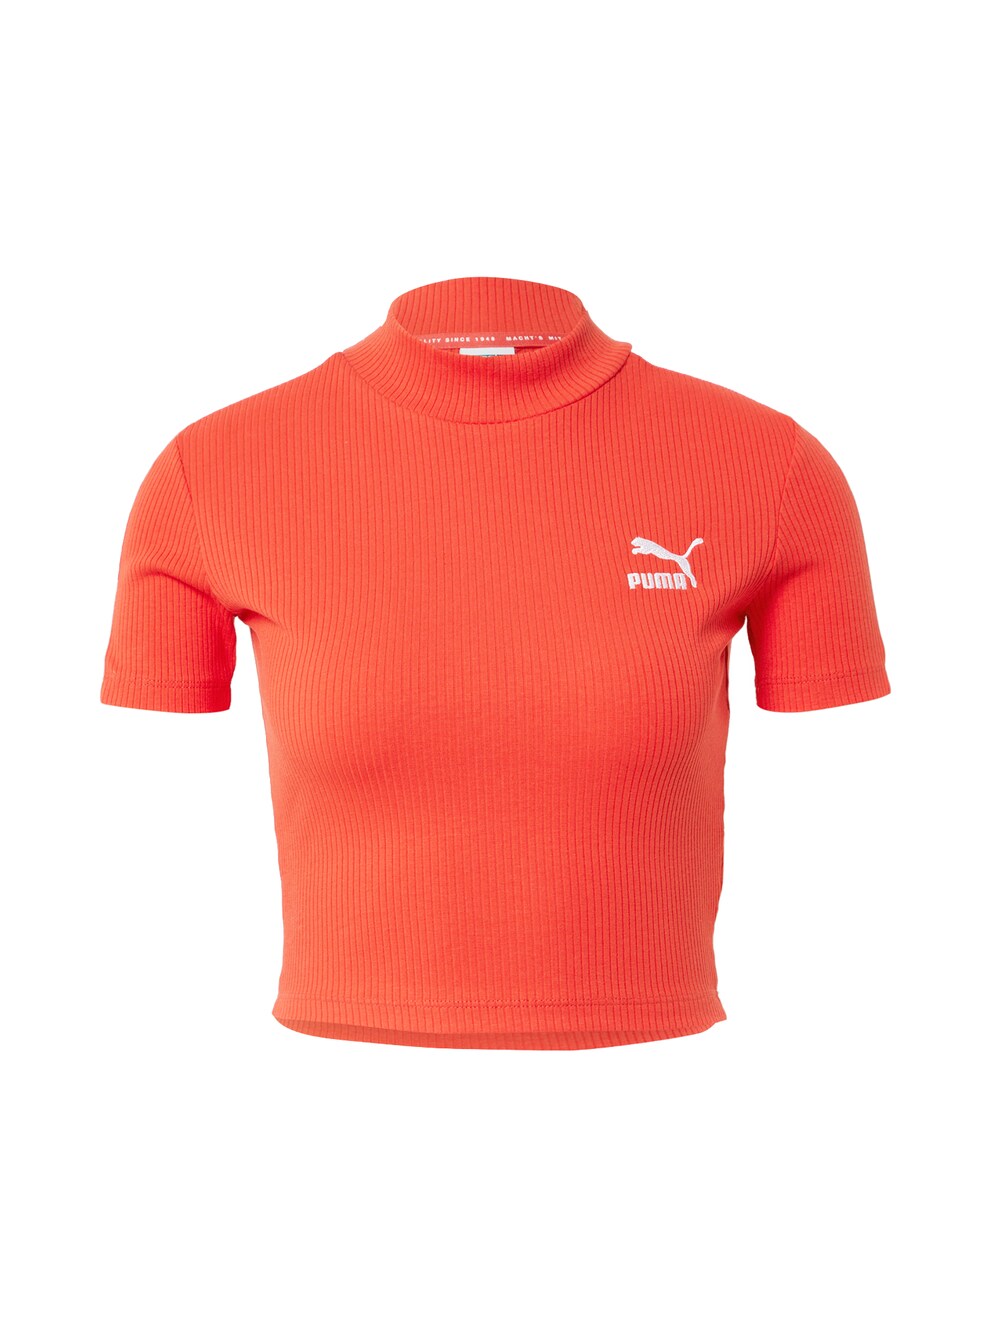 Рубашка PUMA Classics, оранжево-красный рубашка only оранжево красный